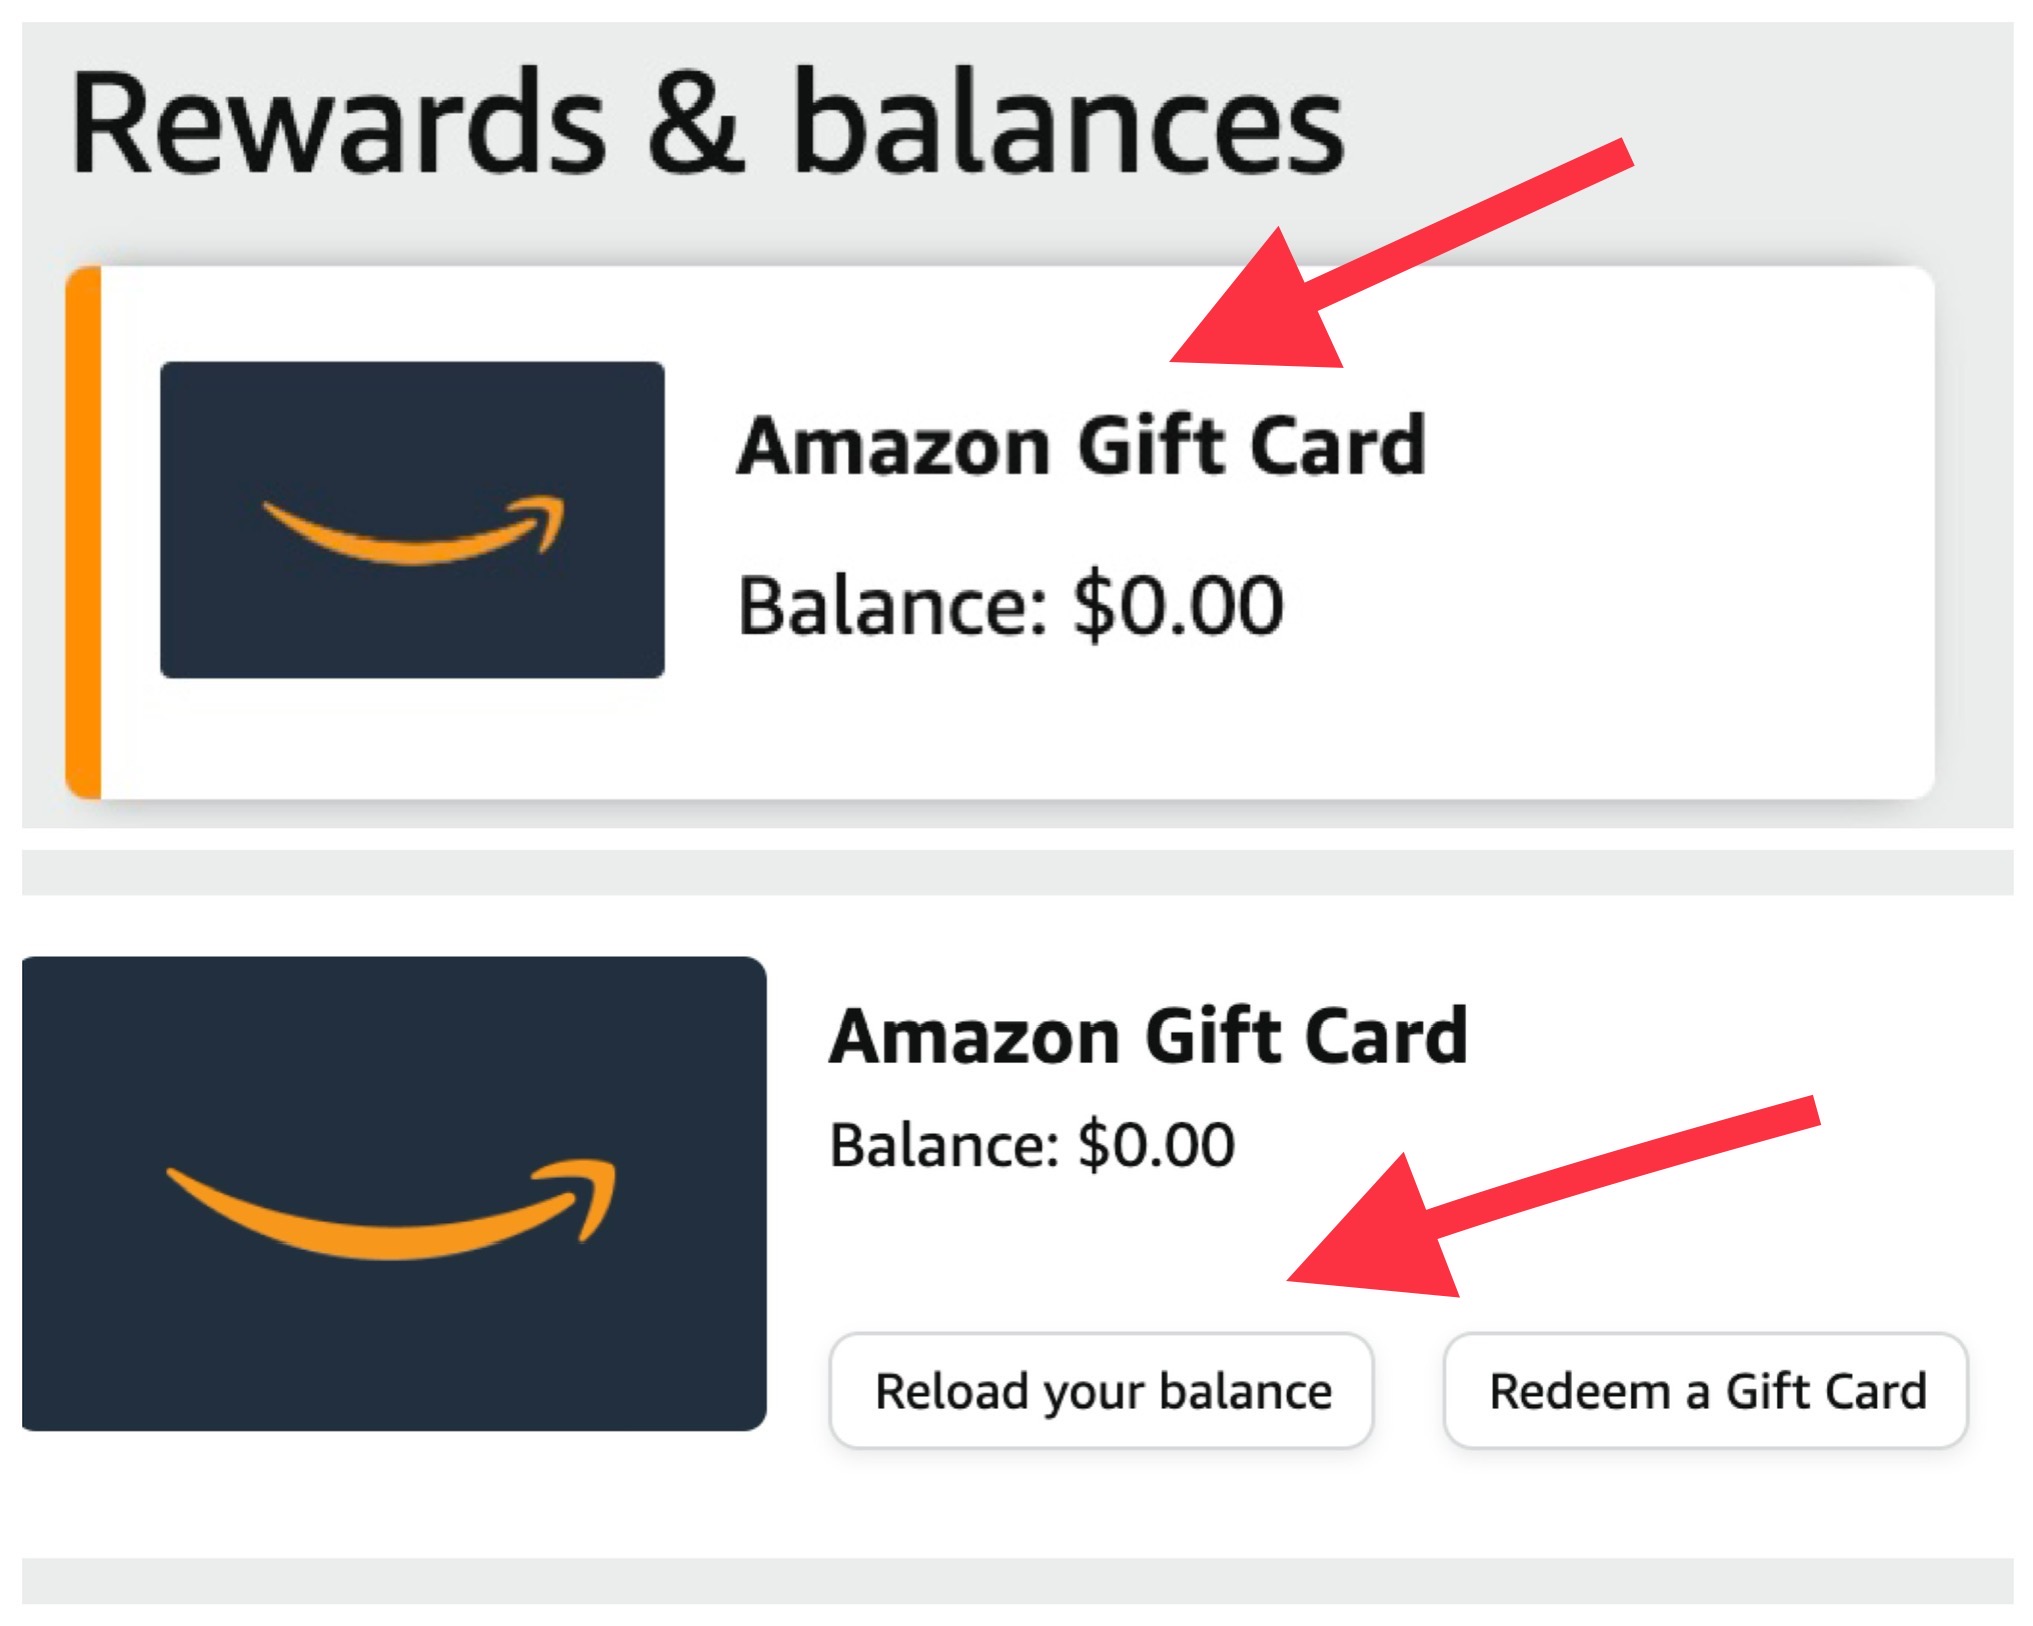 Get 50% Off Gift Cards At Amazon Using Amex Membership Rewards!